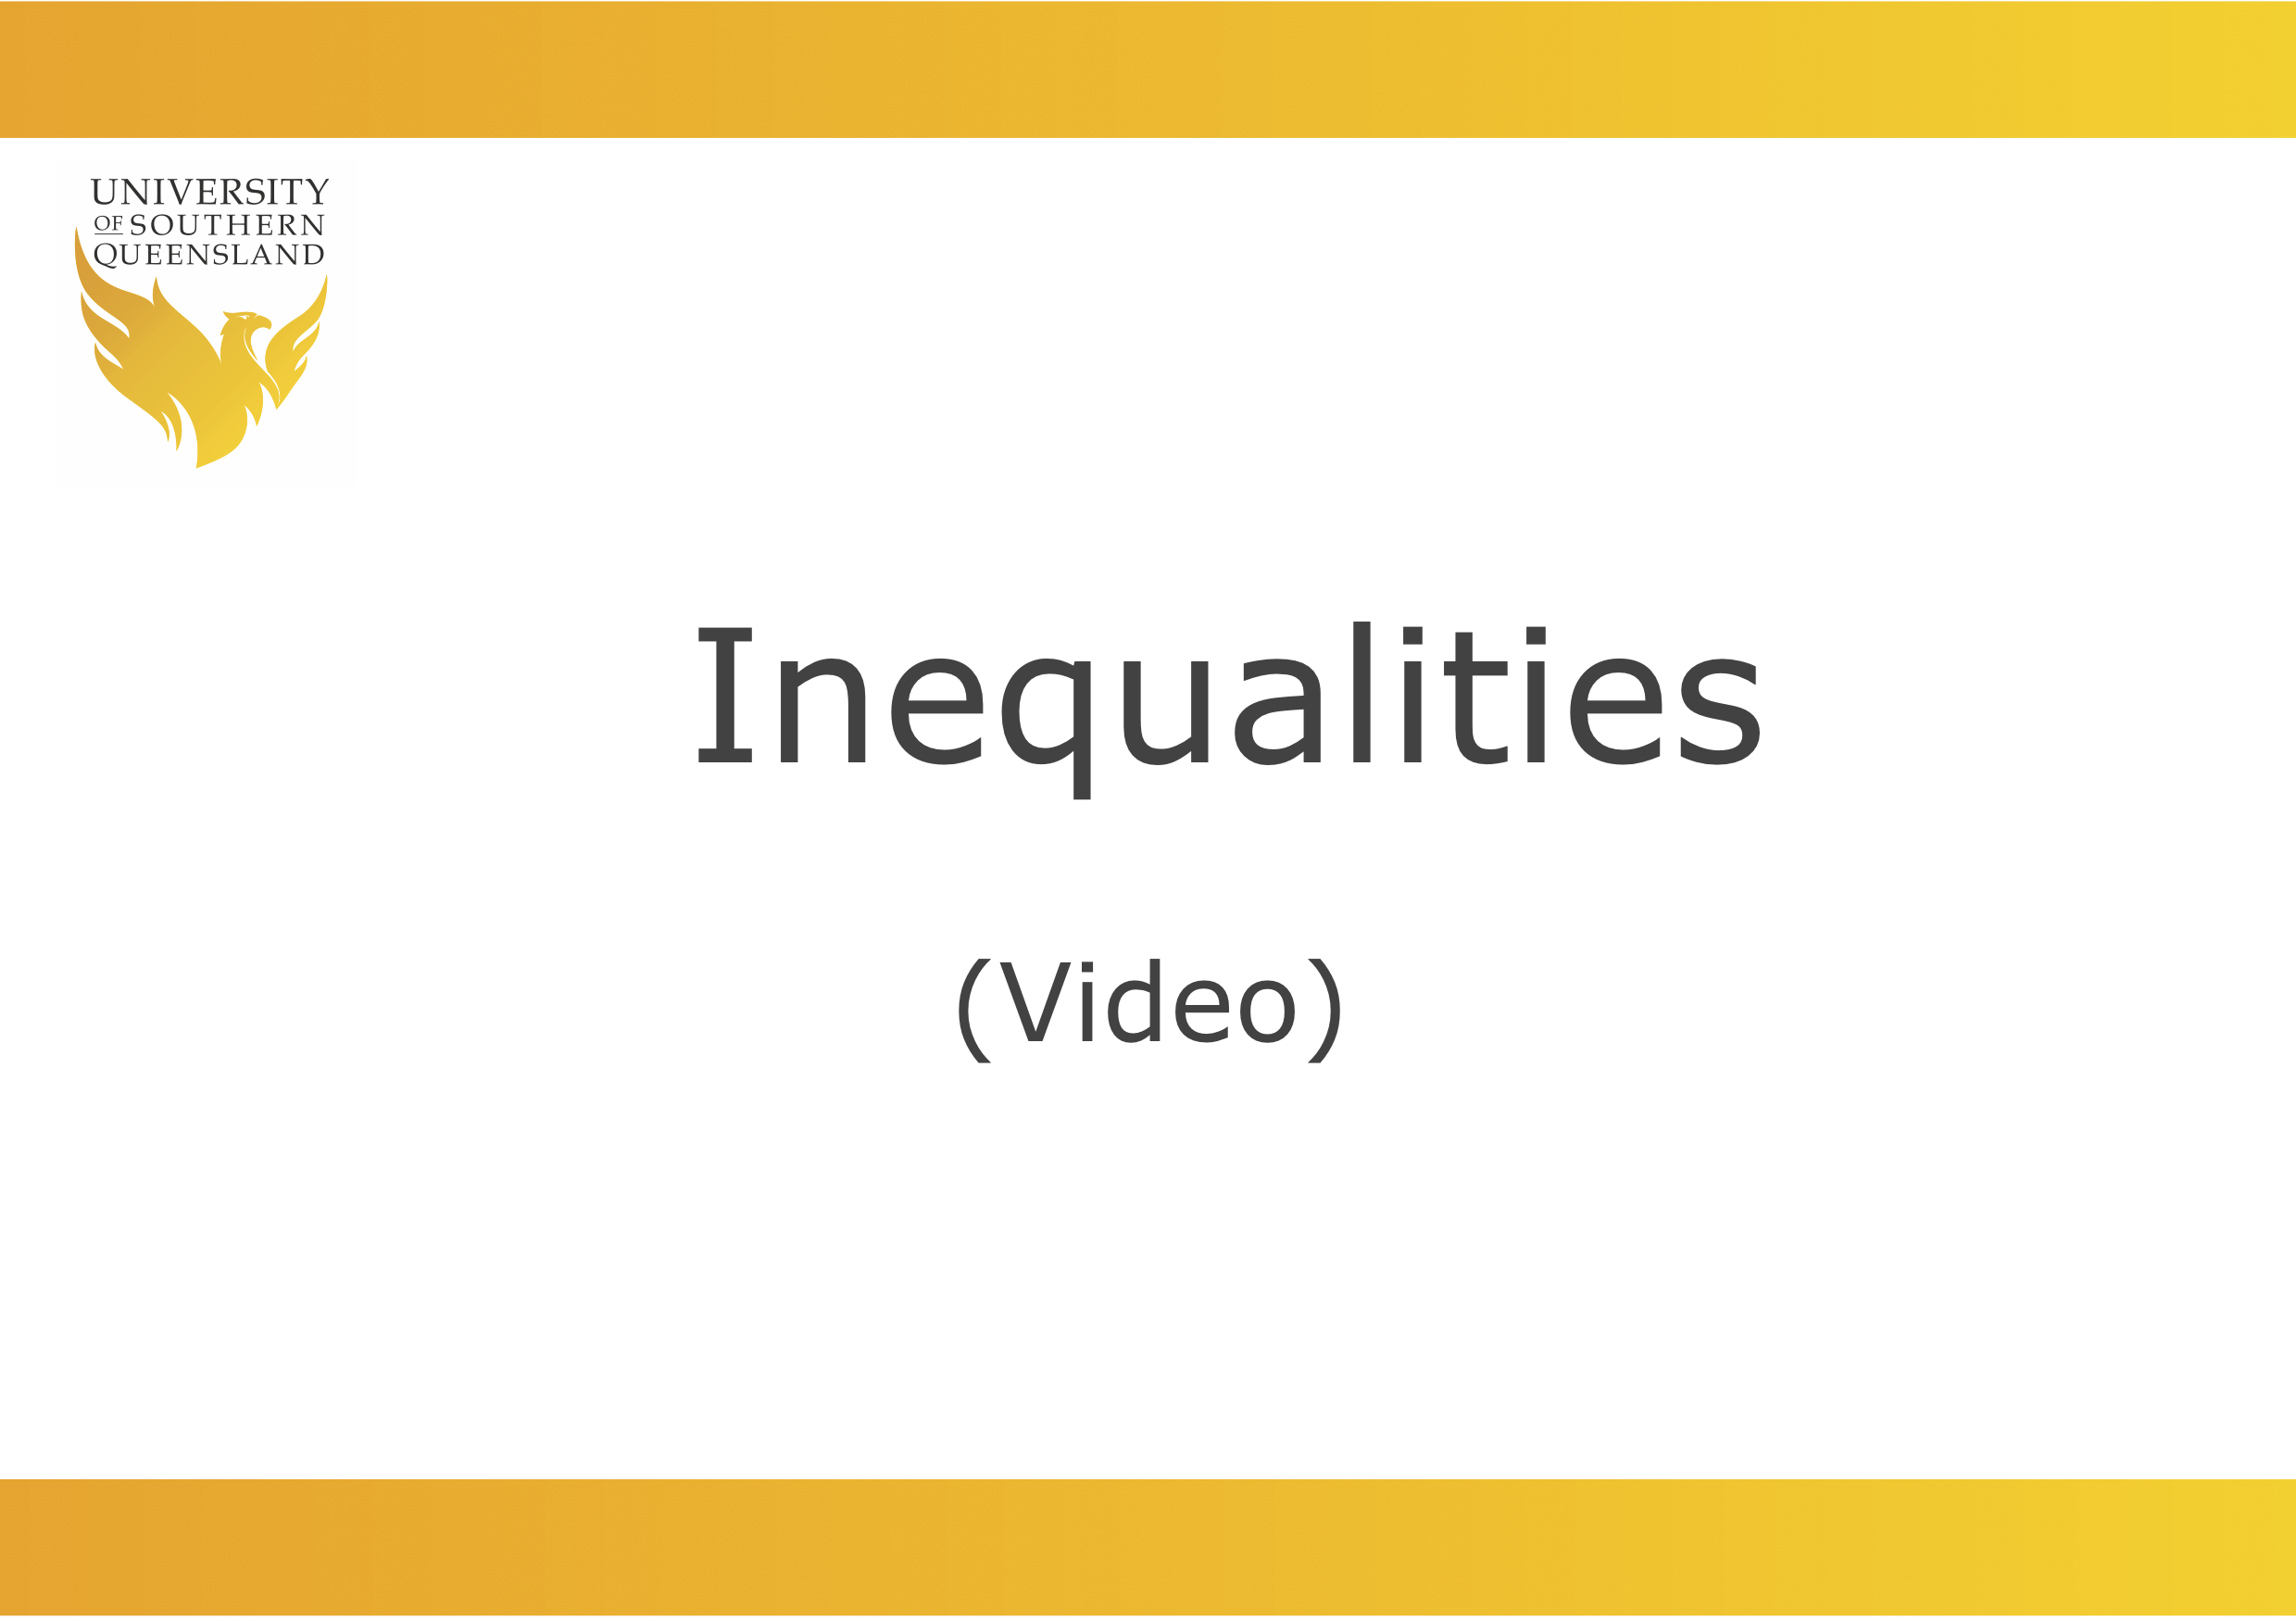 Inequalities video